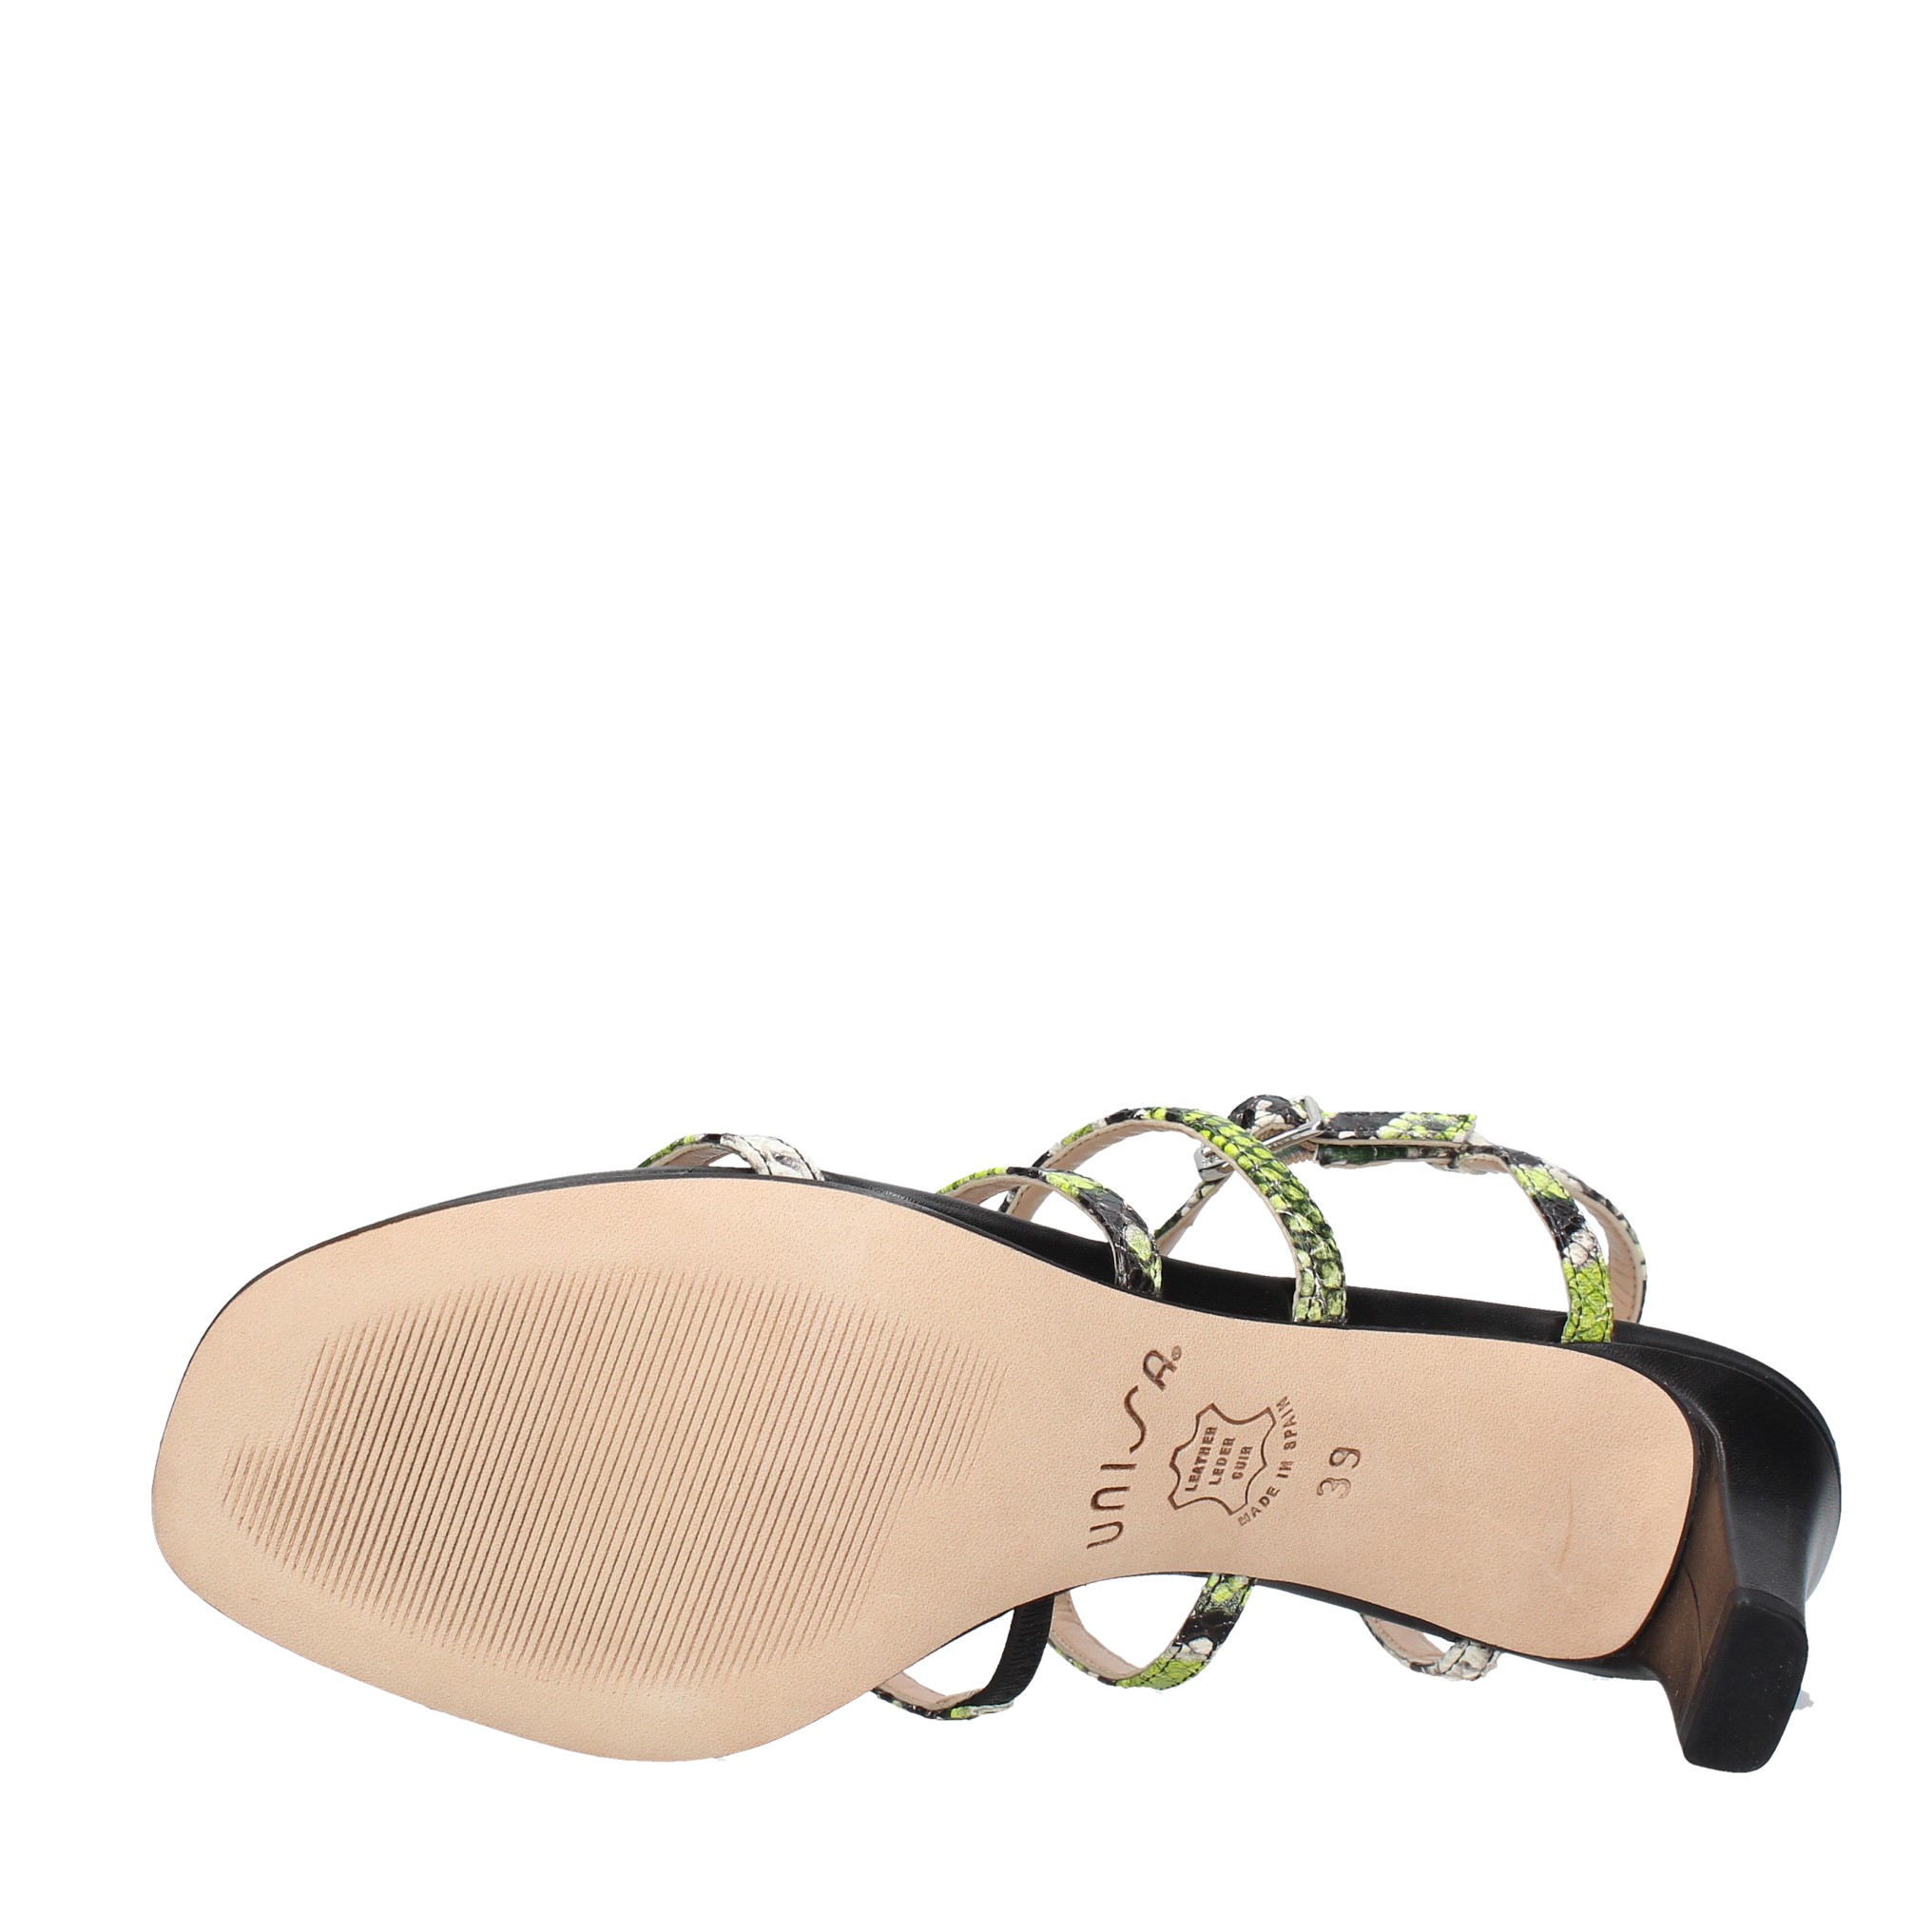 Leather sandals - UNISA - Ginevra calzature